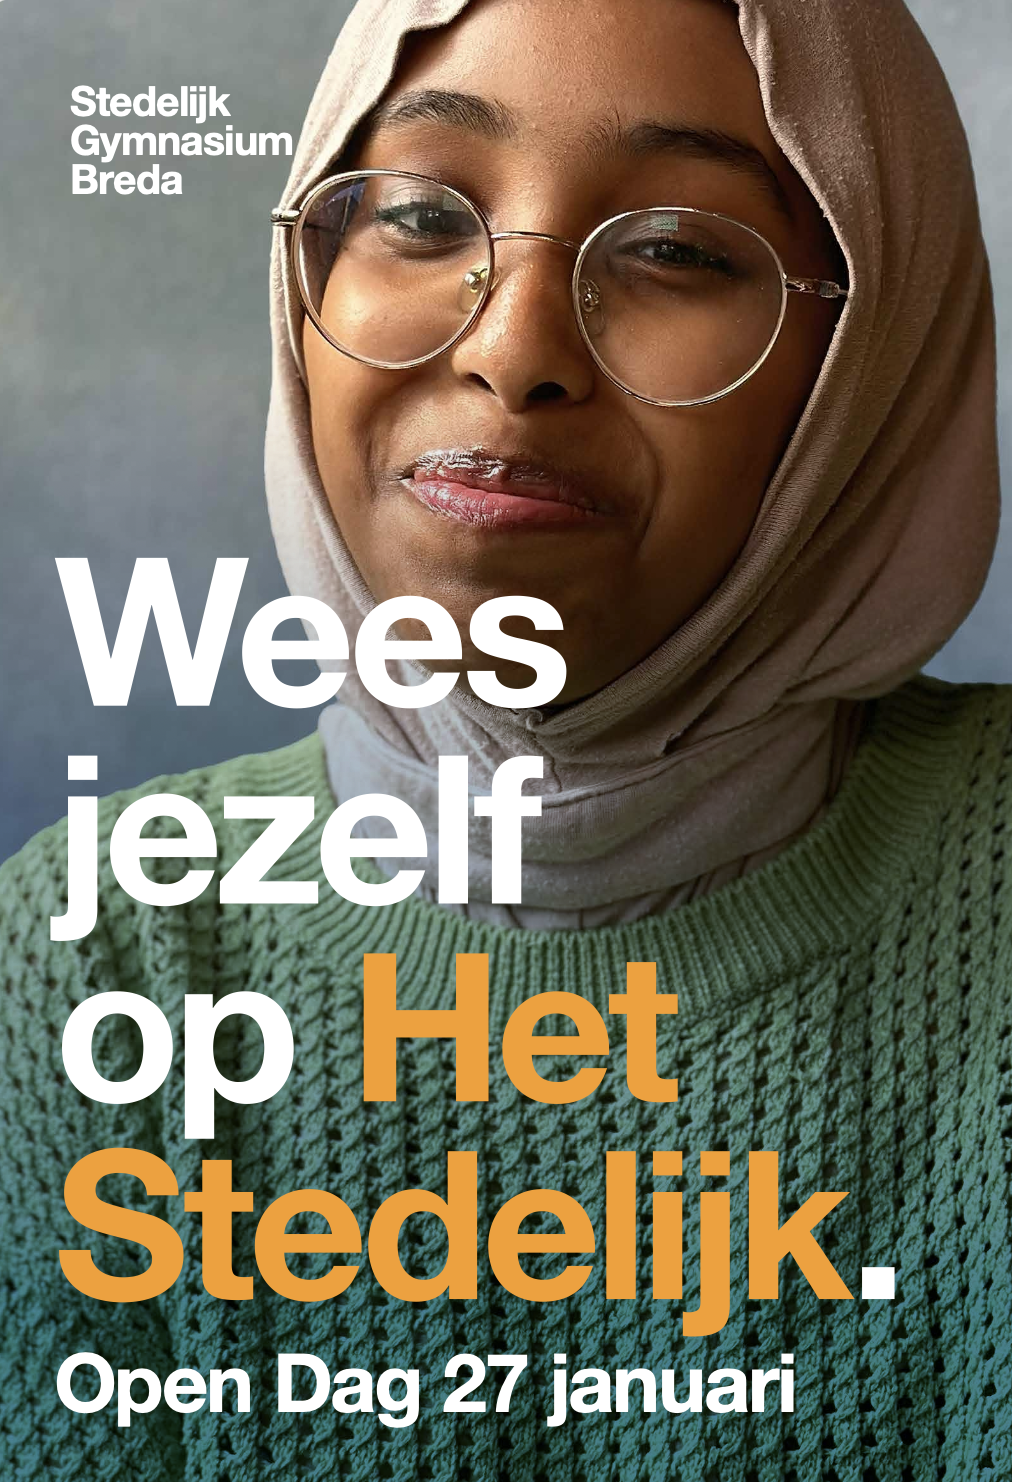 Campagne Stedelijk Gymnasium Breda